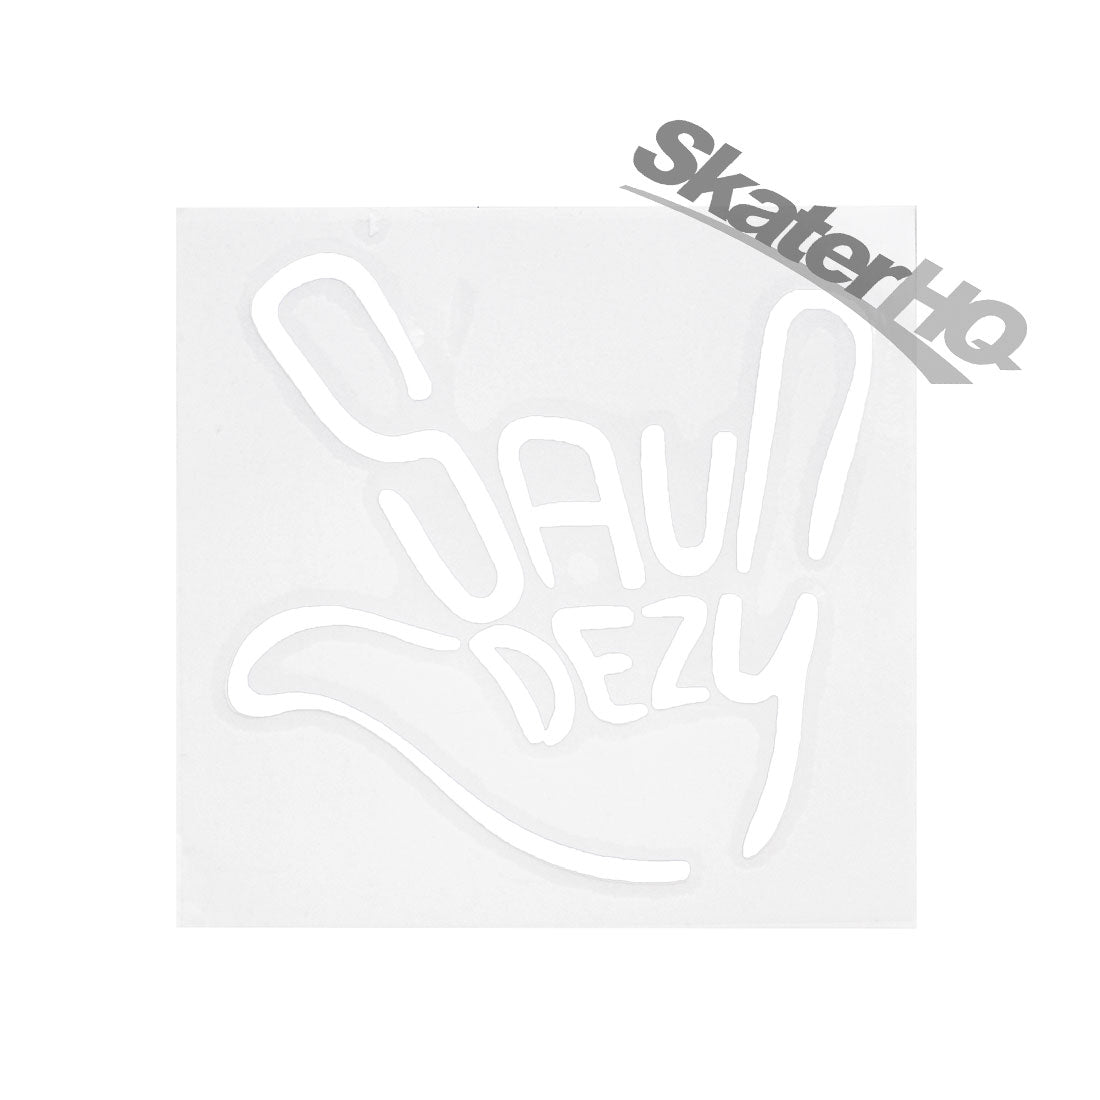 Saundezy Hand Sticker - White/Clear Stickers